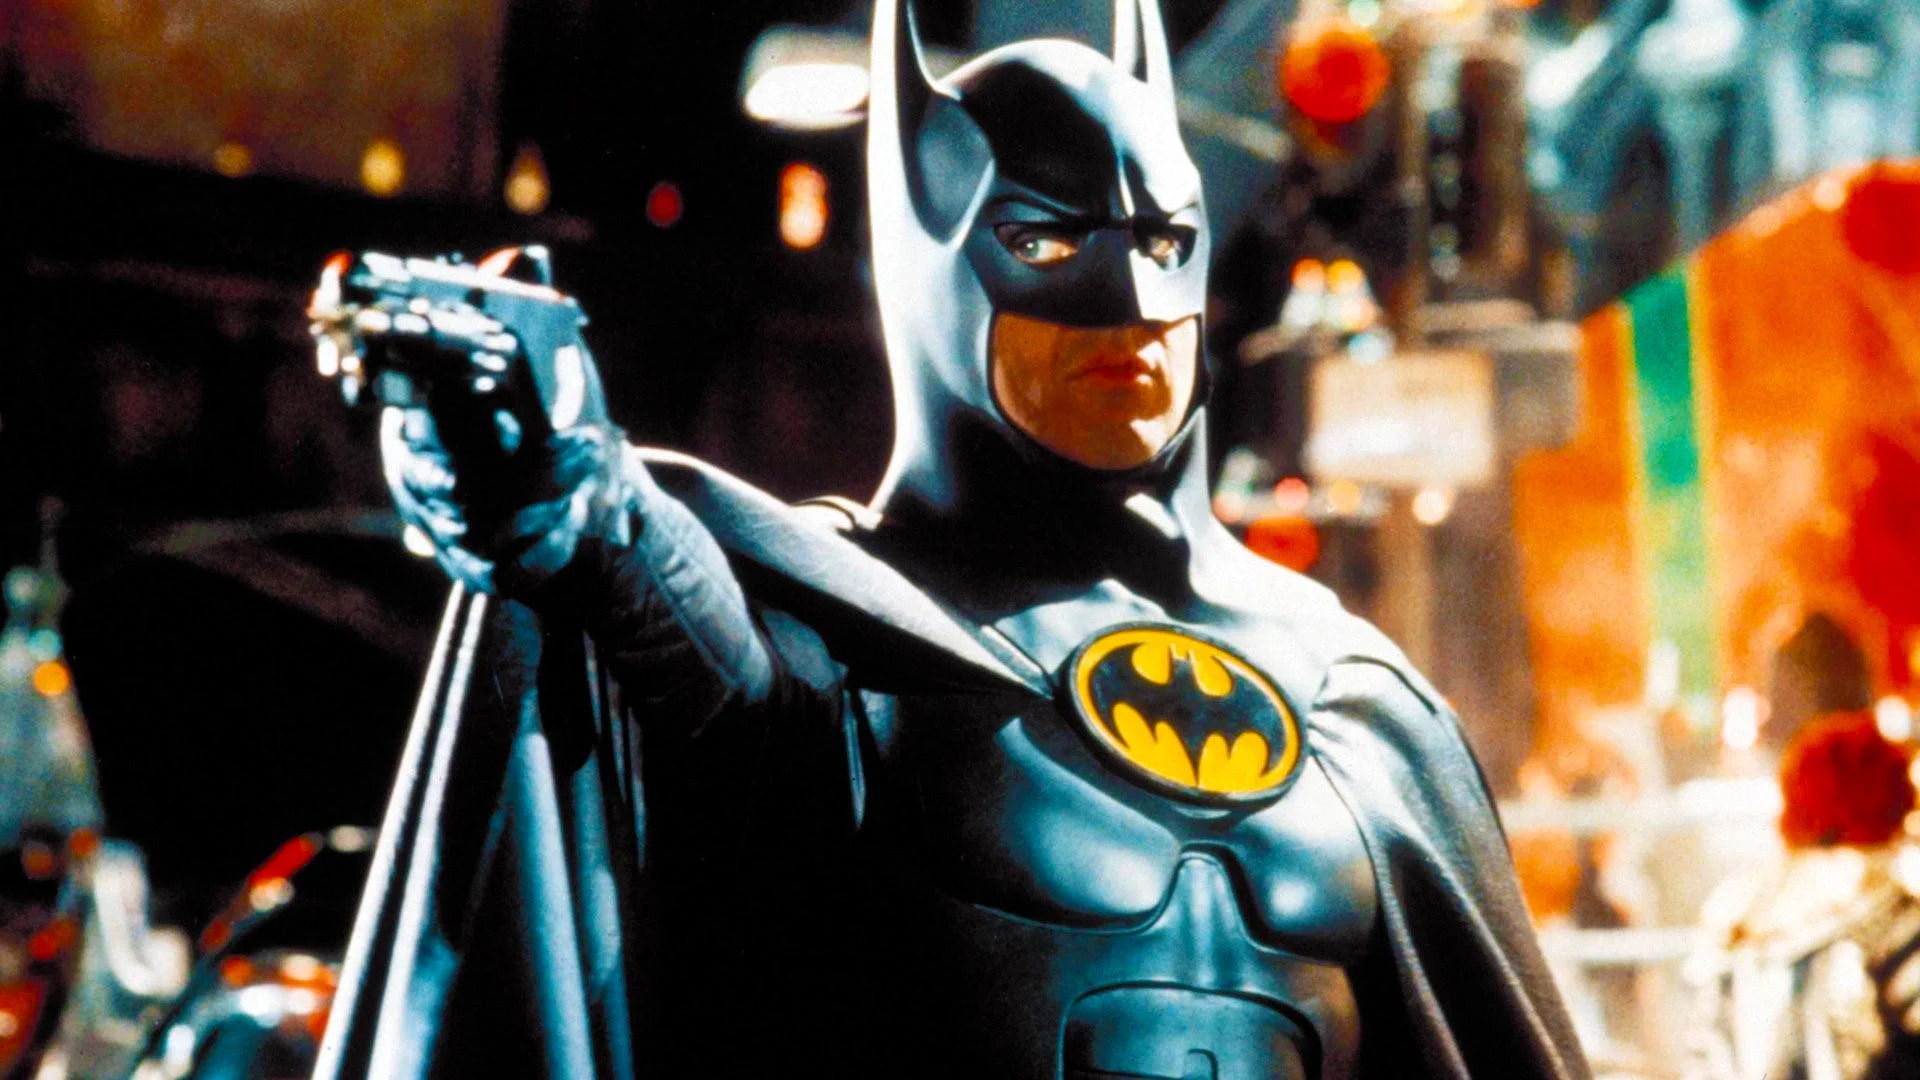 Michael Keaton's Batman with grapple gun in Batman Returns.